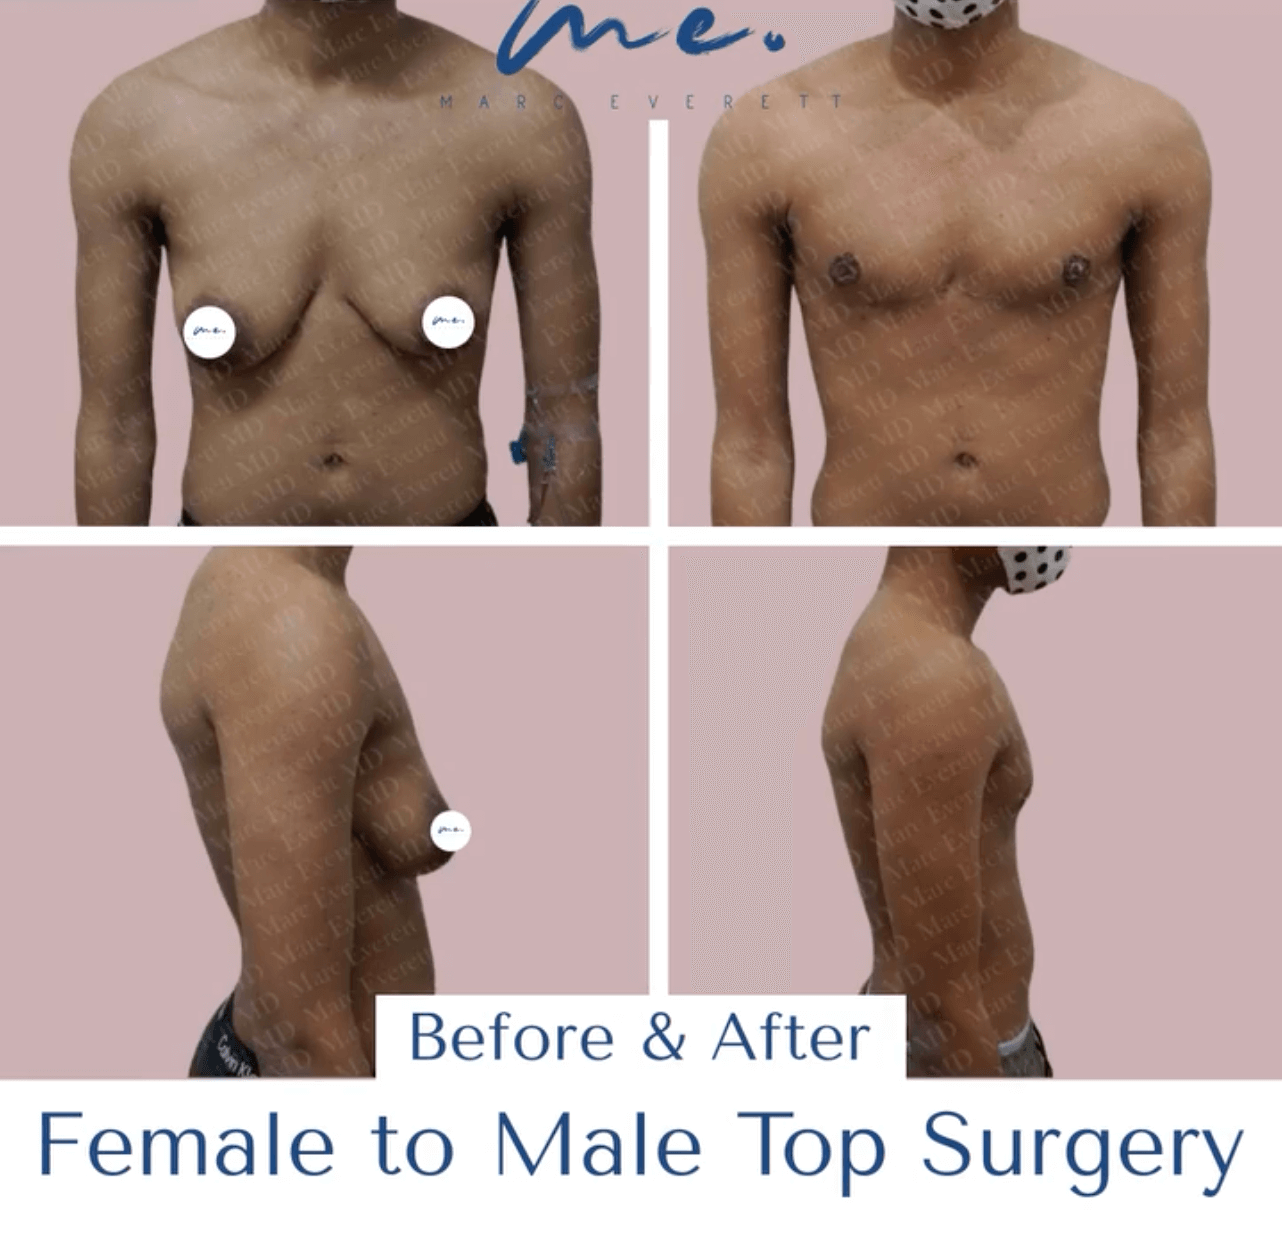 Top Surgery - Take Shape Plastic Surgery